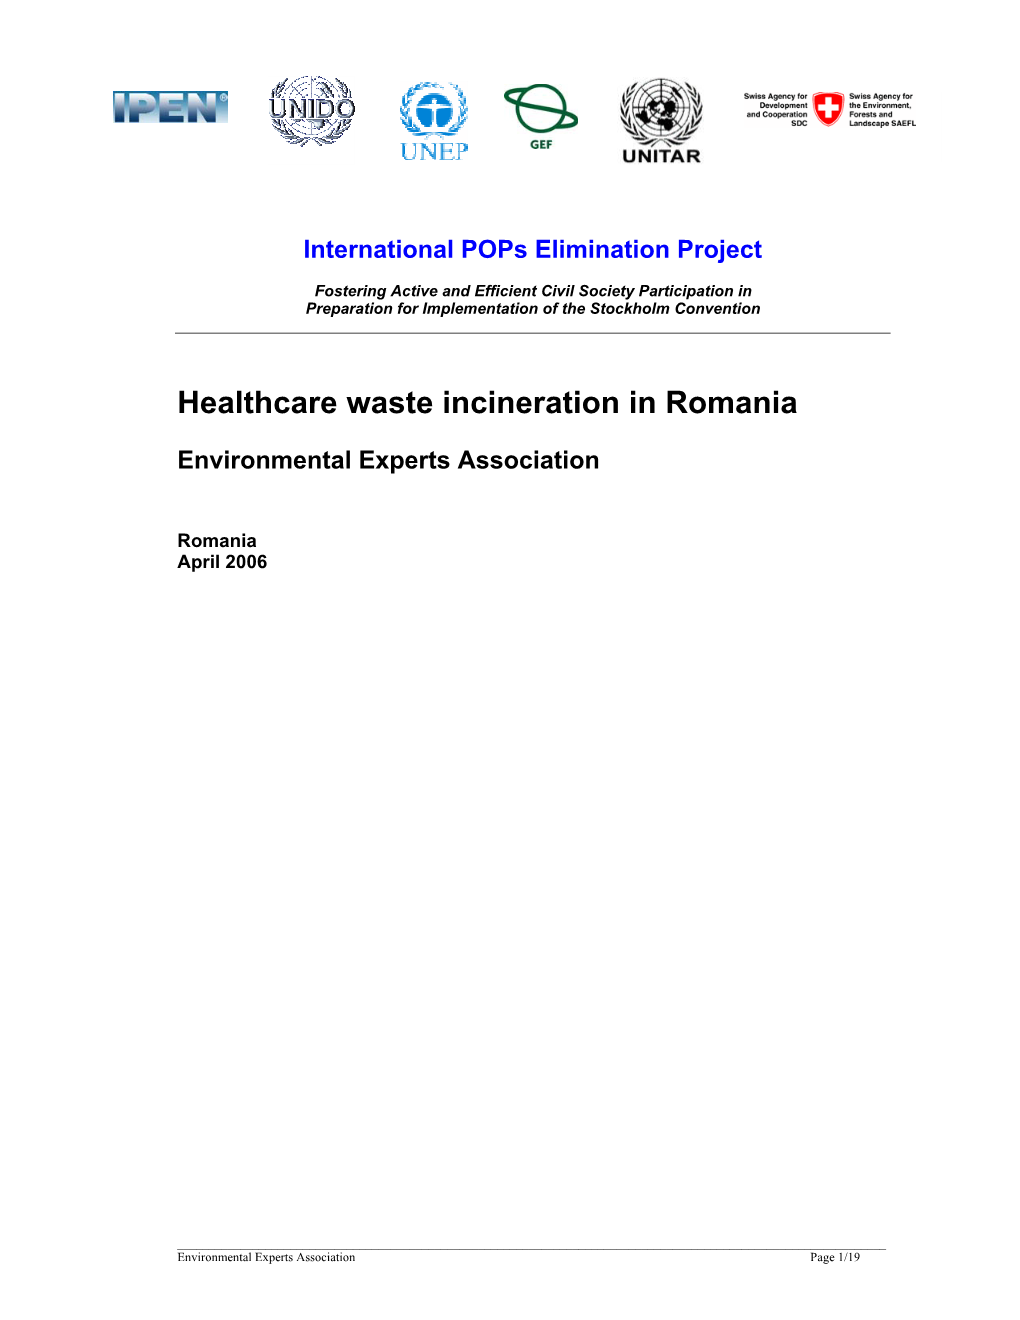 Healthcare Waste Incineration in Romania